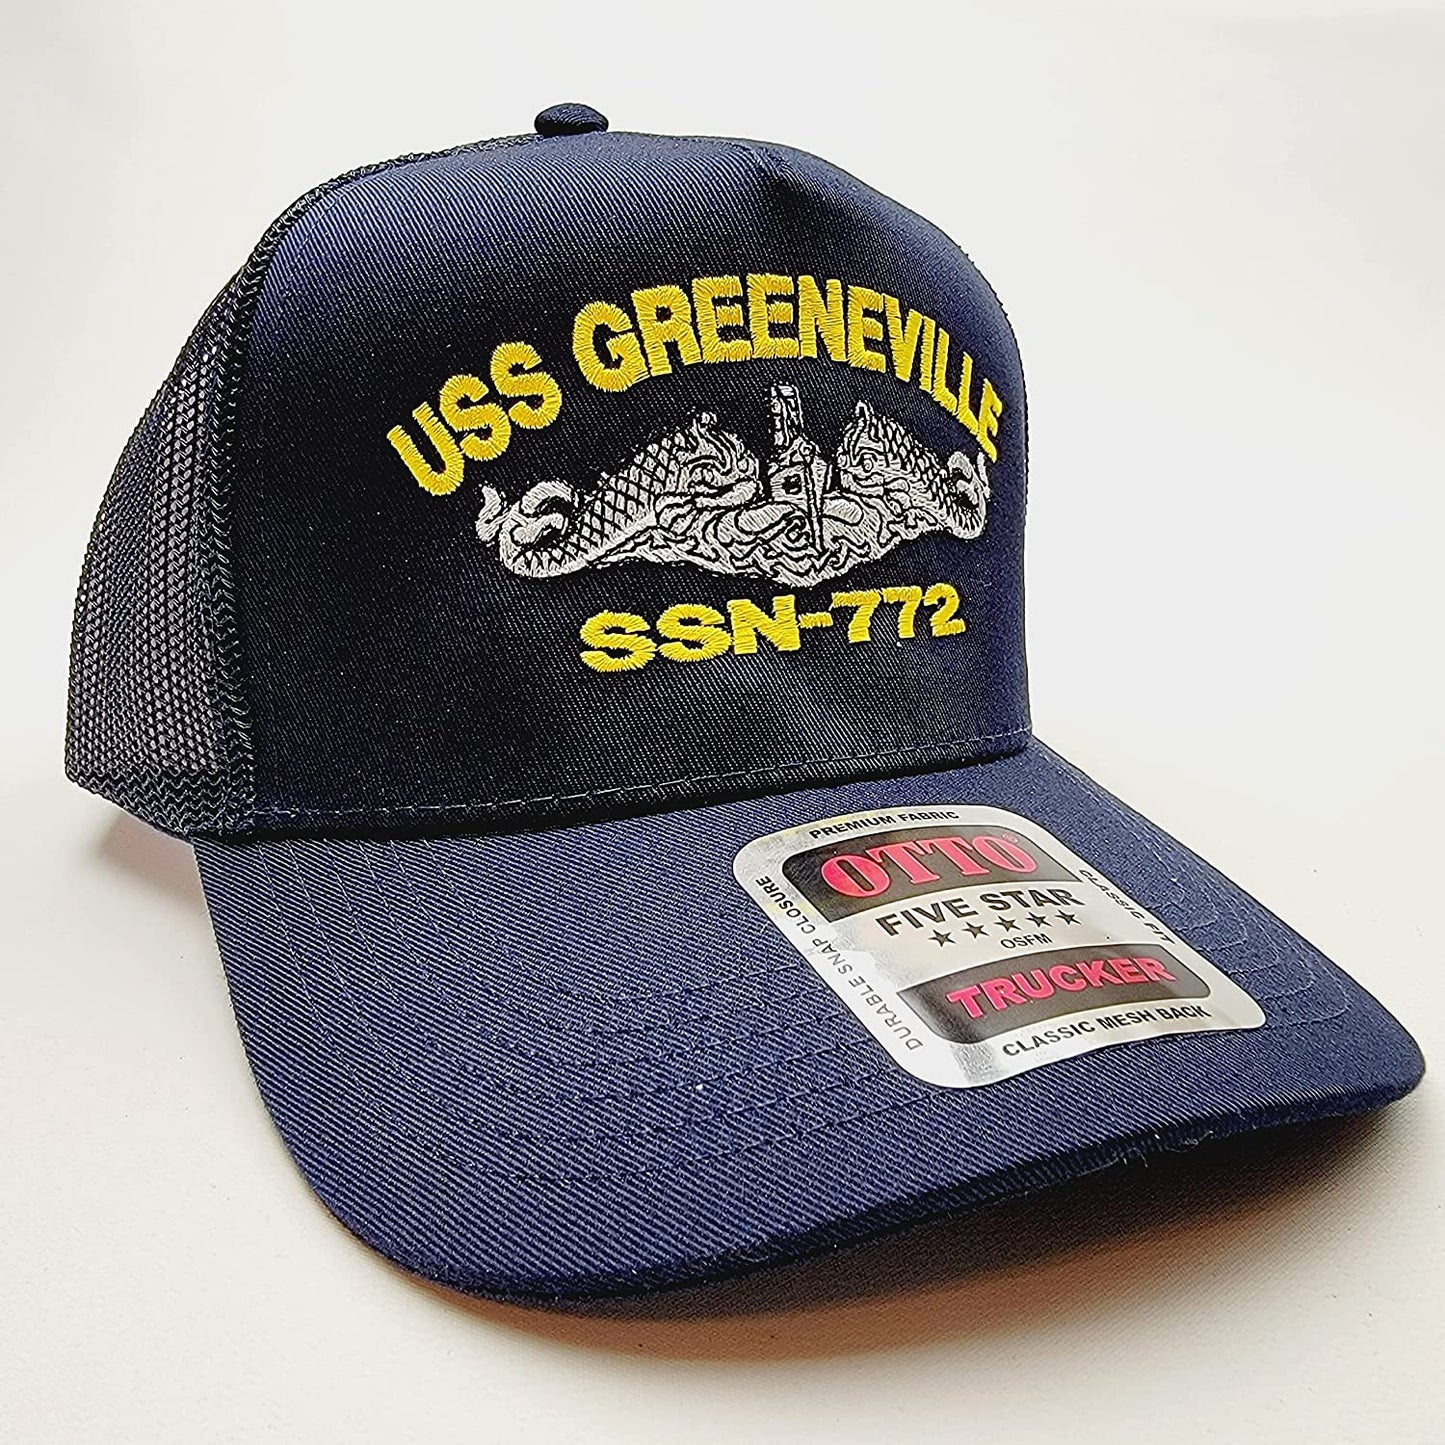 US NAVY USS GREENEVILLE SSN-772 Embroidered Hat Baseball Cap Adjustable Blue